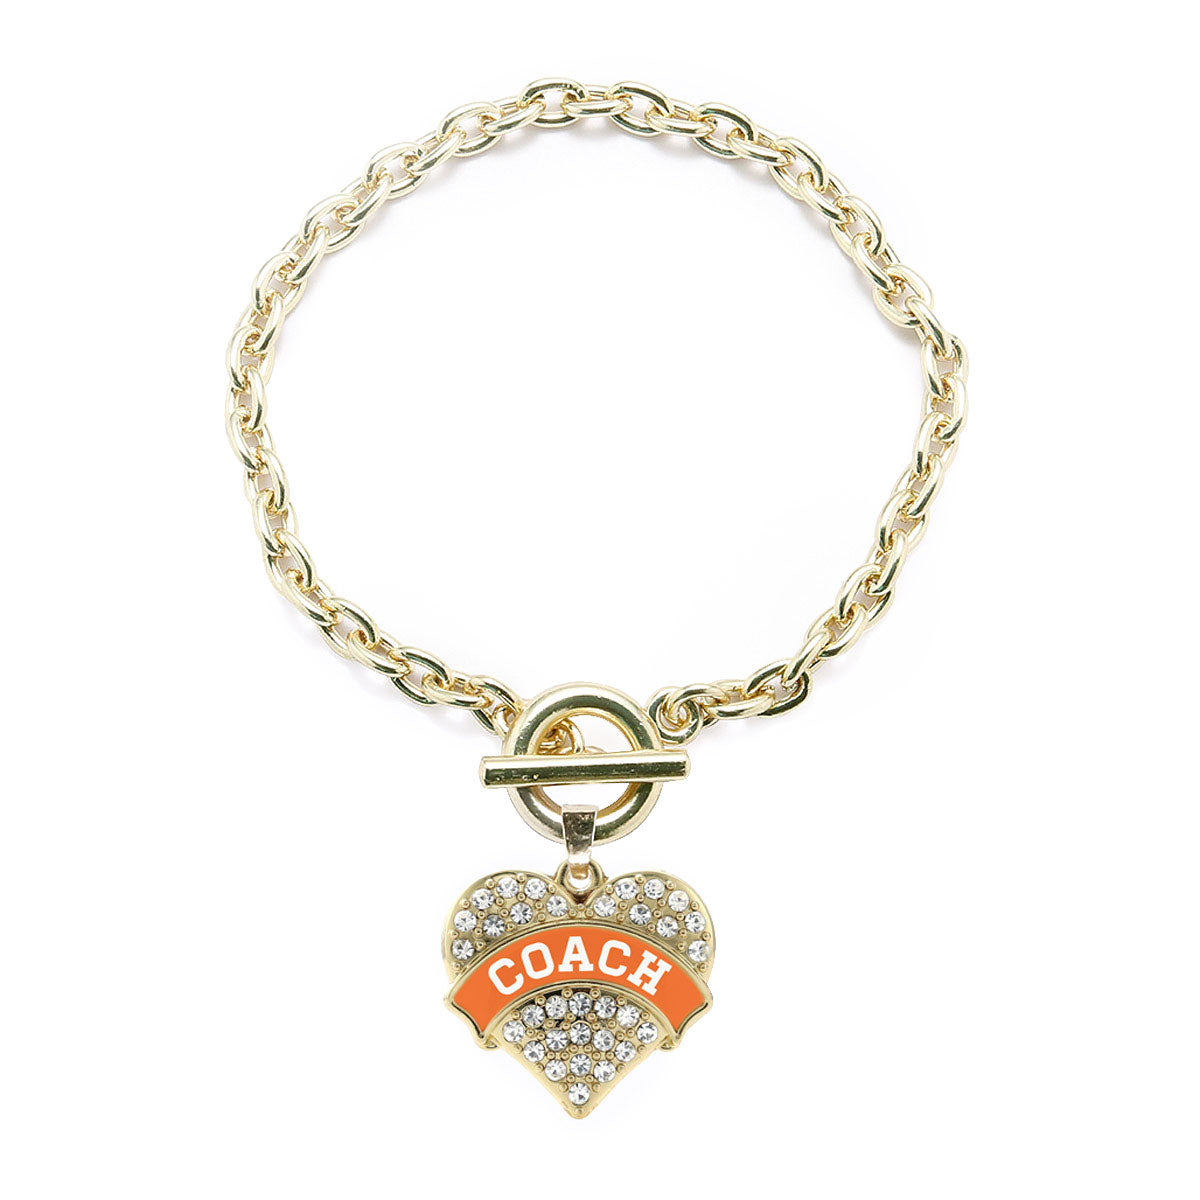 Gold Coach - Orange and White Pave Heart Charm Toggle Bracelet